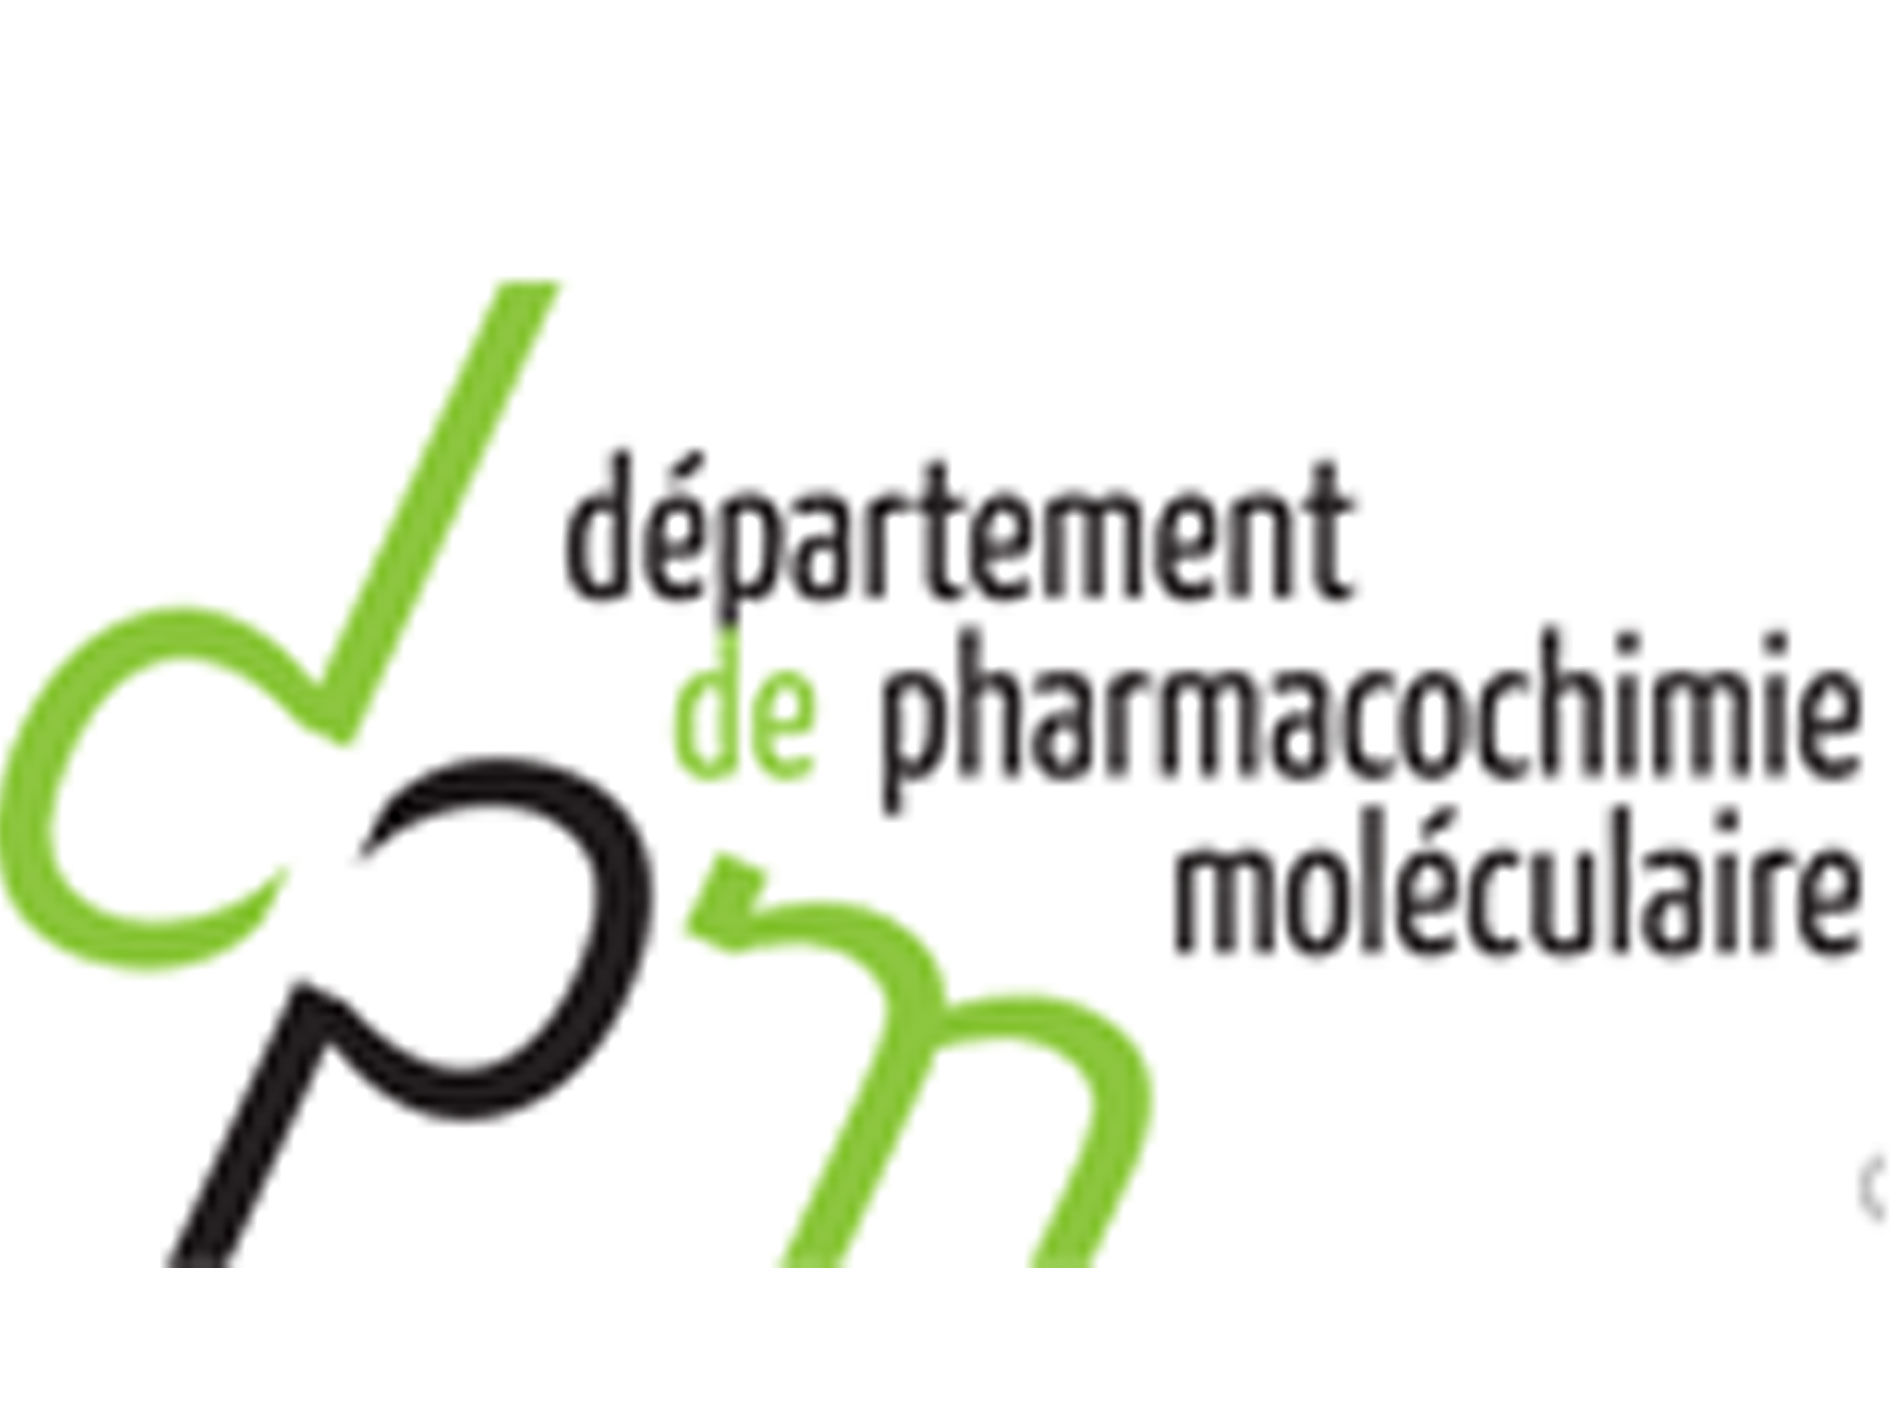 DPM logo